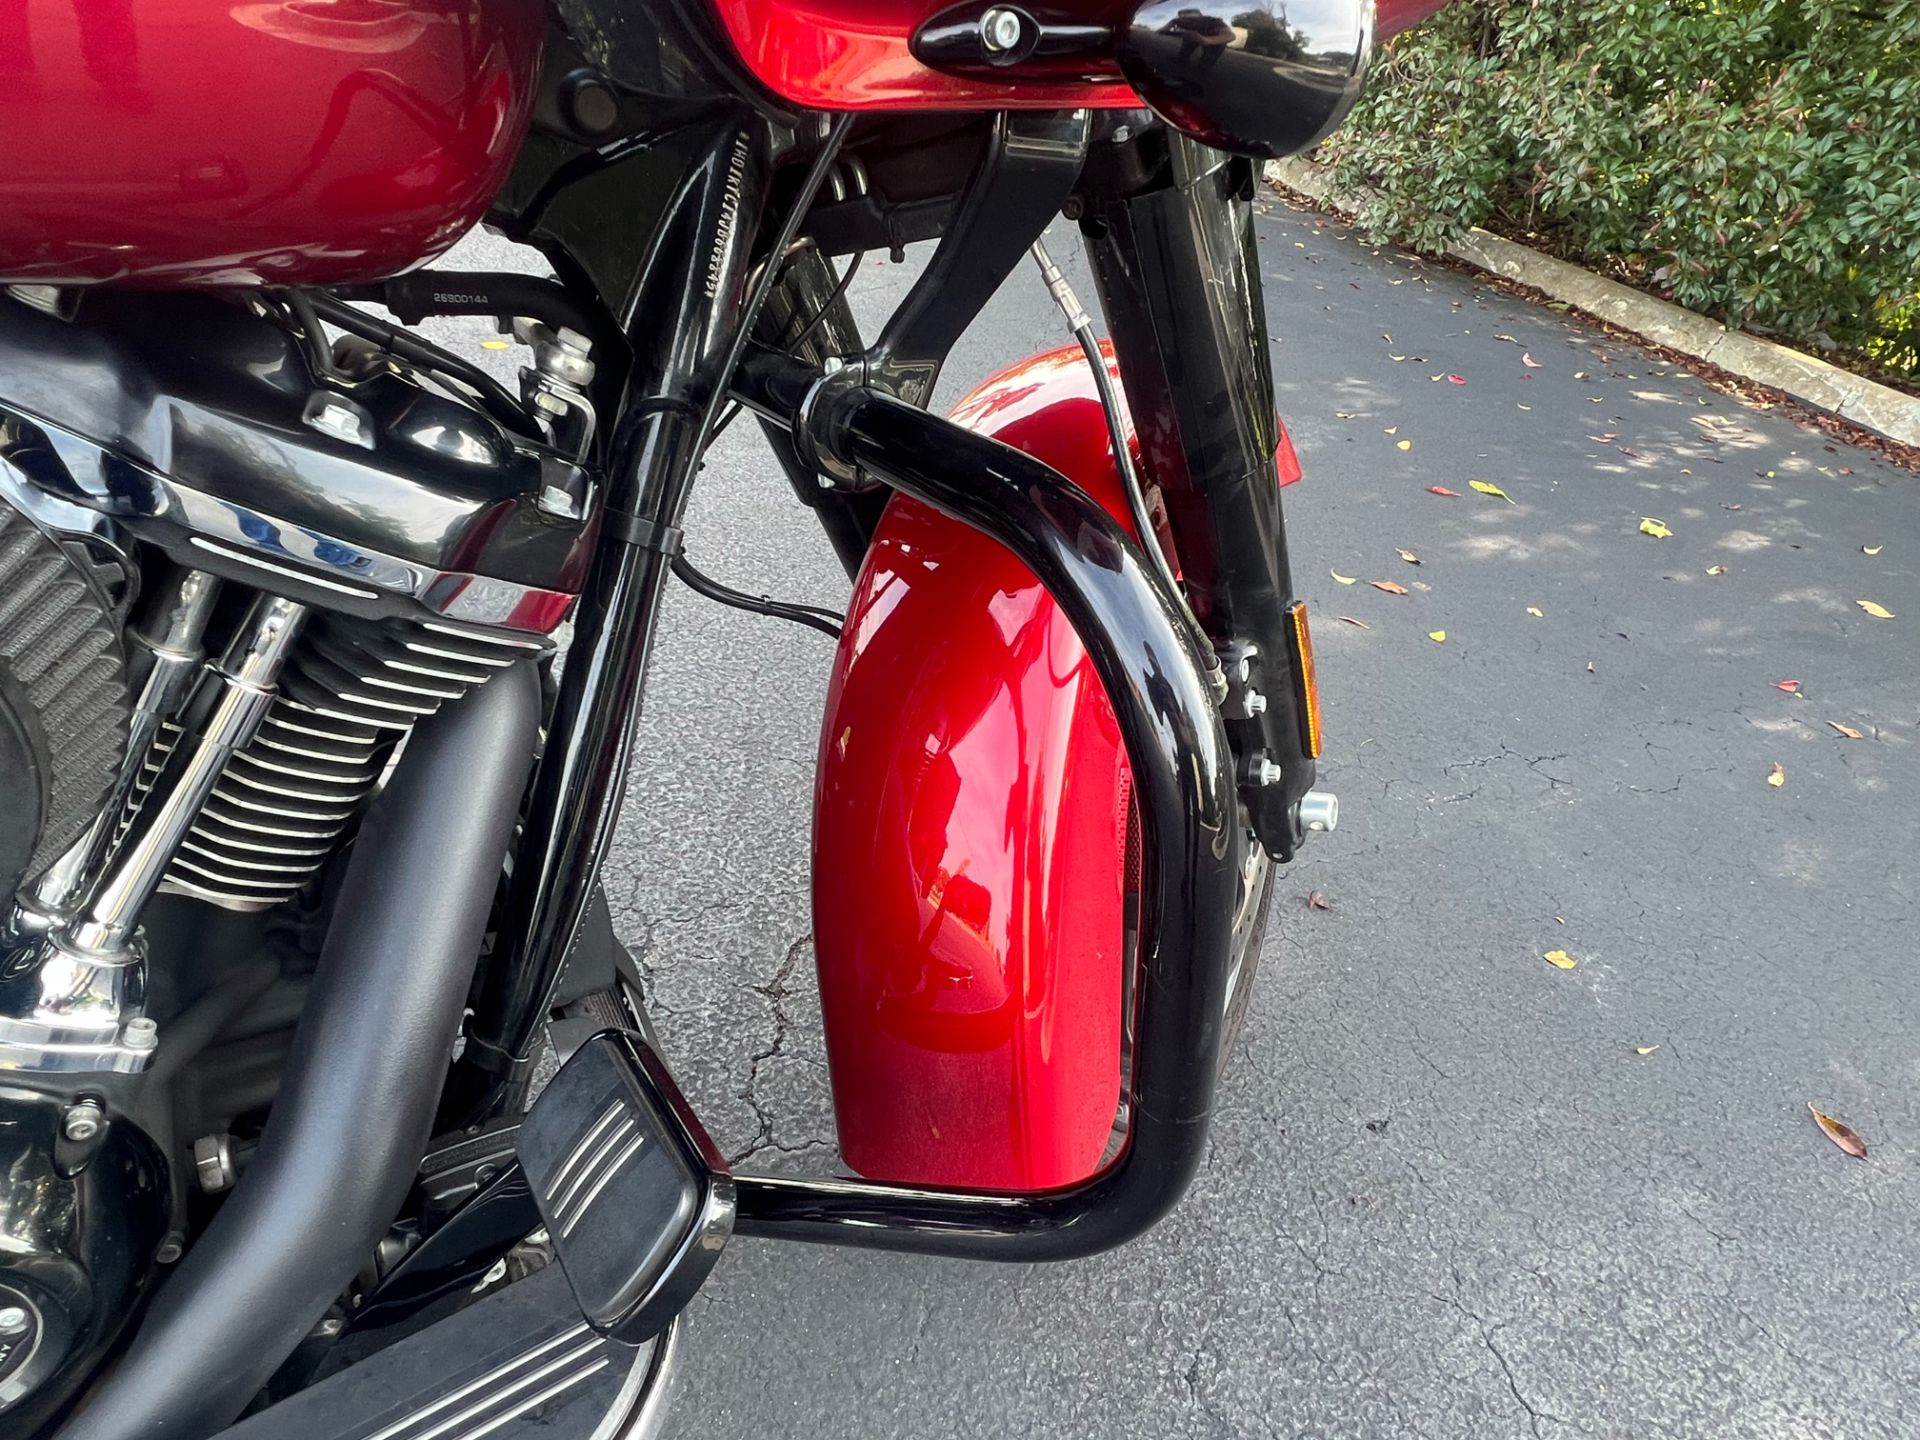 2018 Harley-Davidson Road Glide® Special in Lynchburg, Virginia - Photo 26